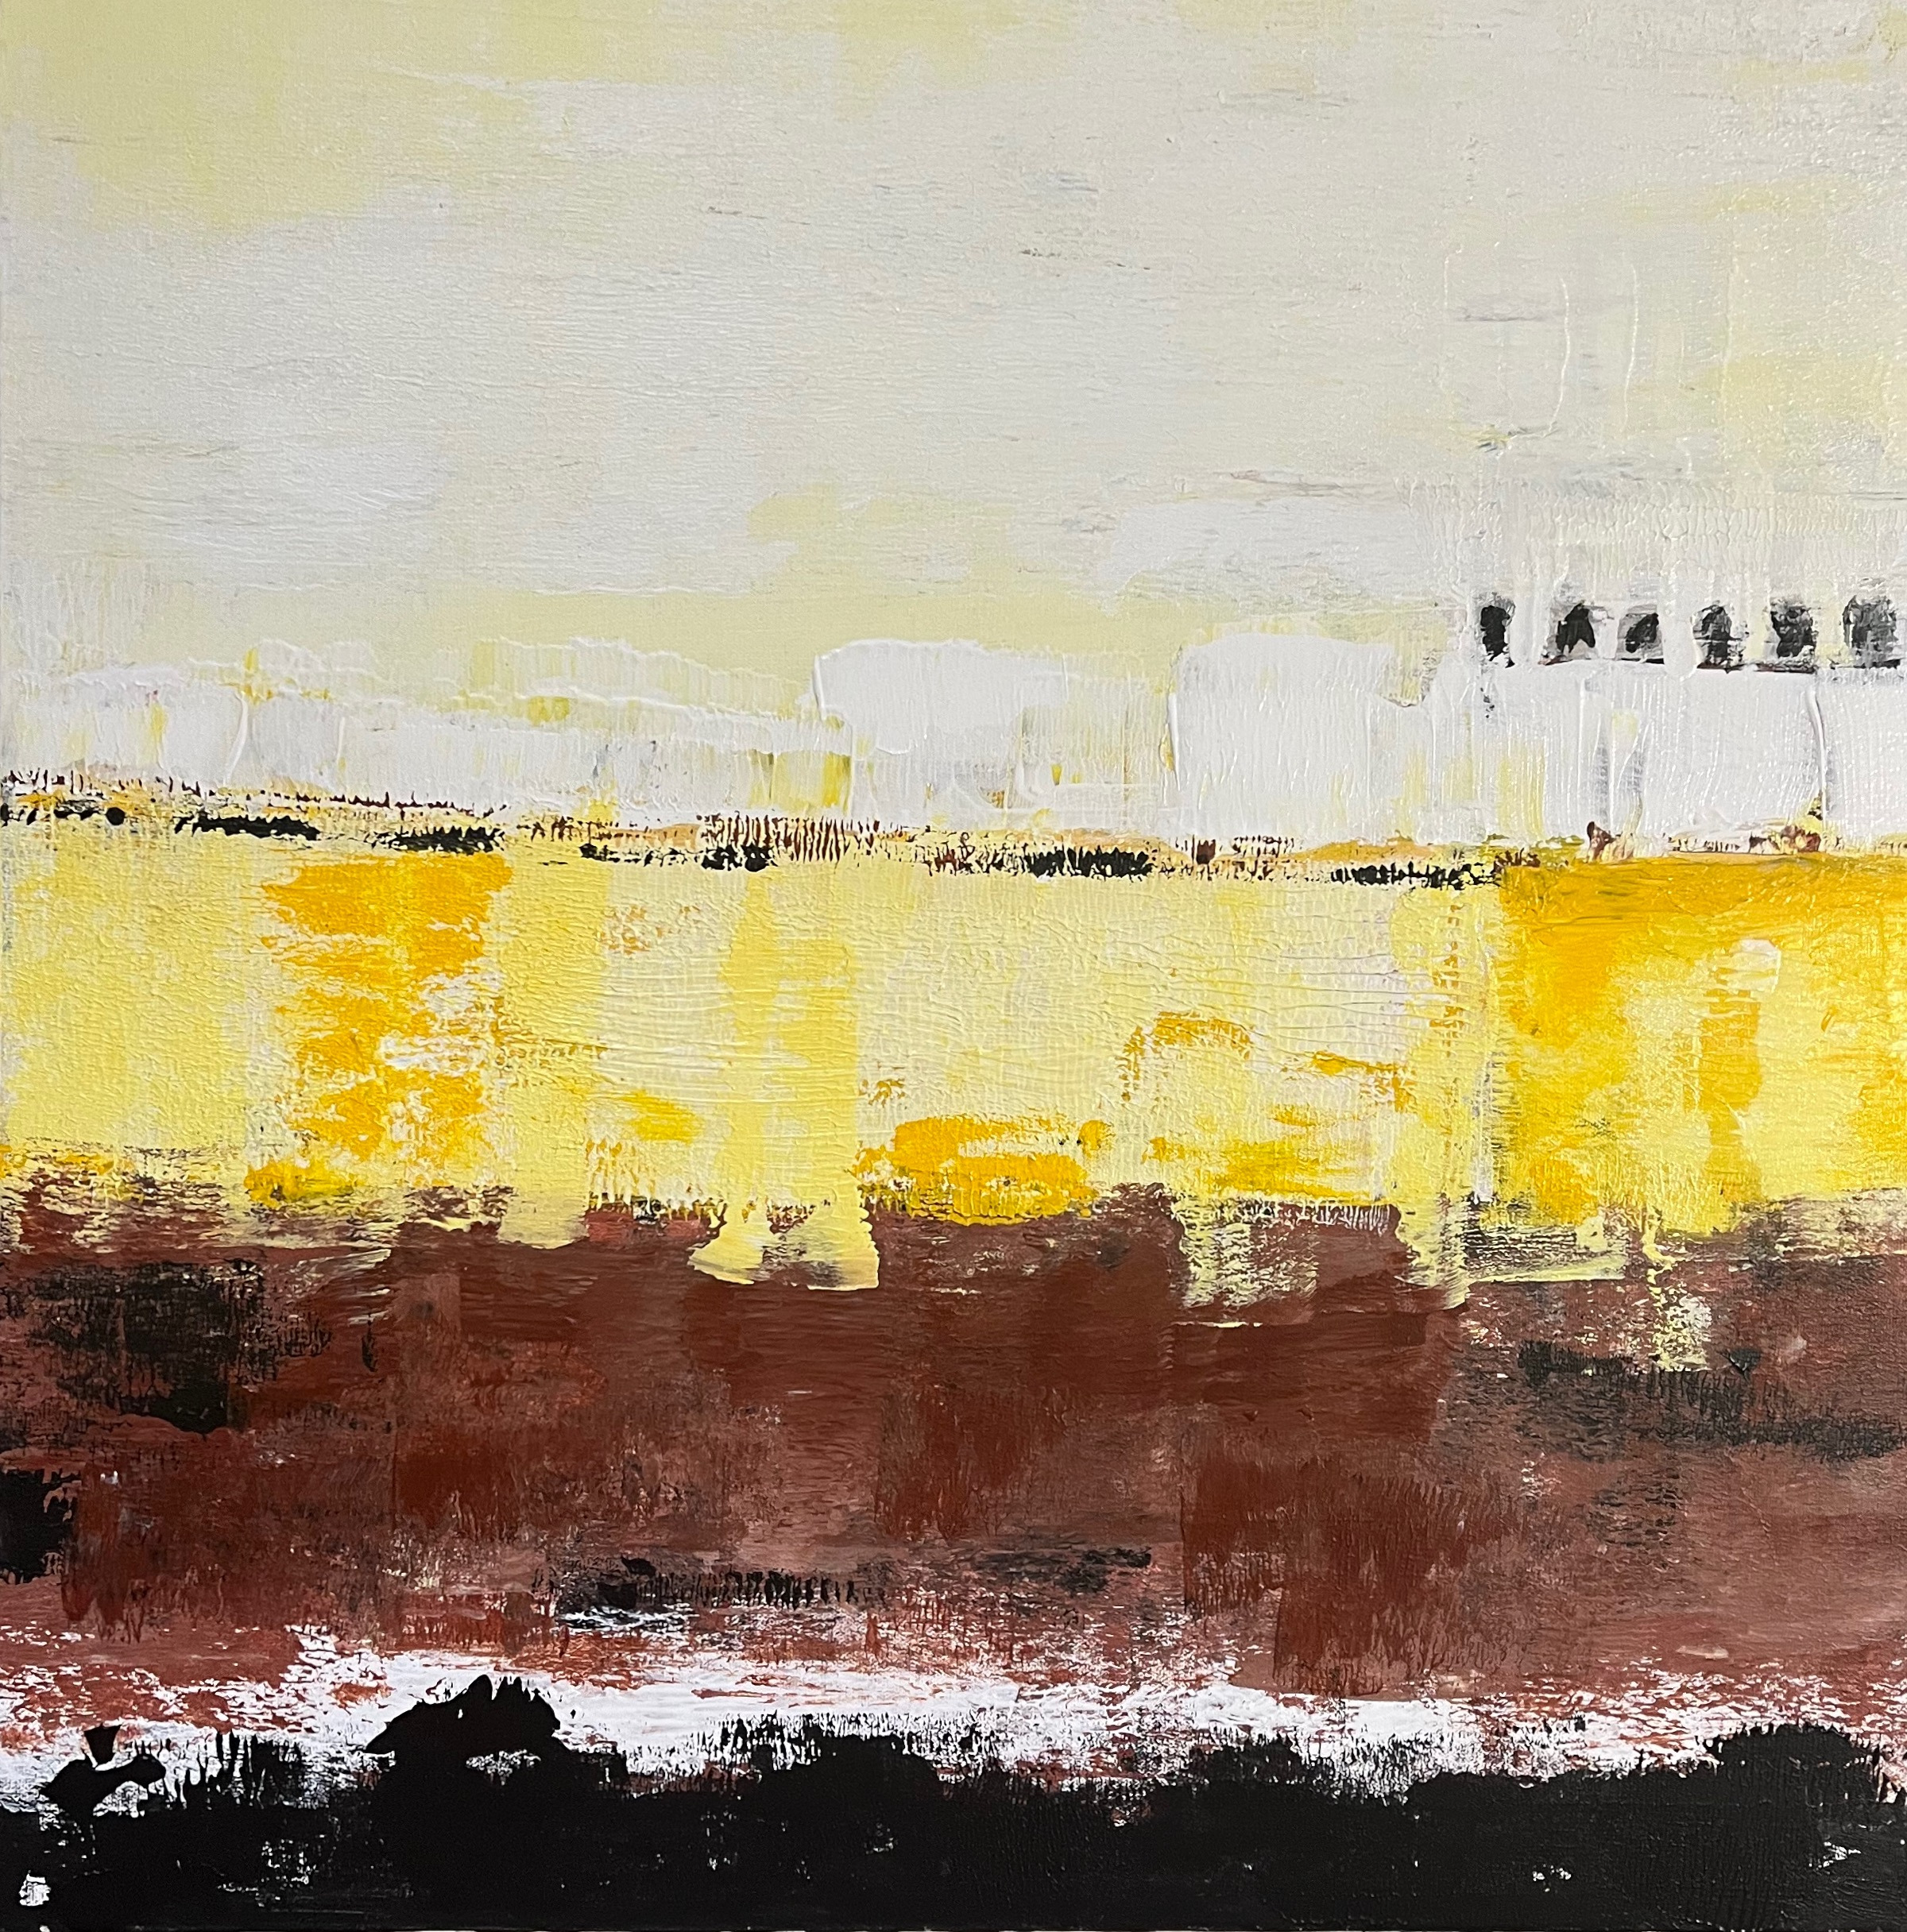 Breath over the yellow earth. acrylic on canvas 24x24 bbjwej